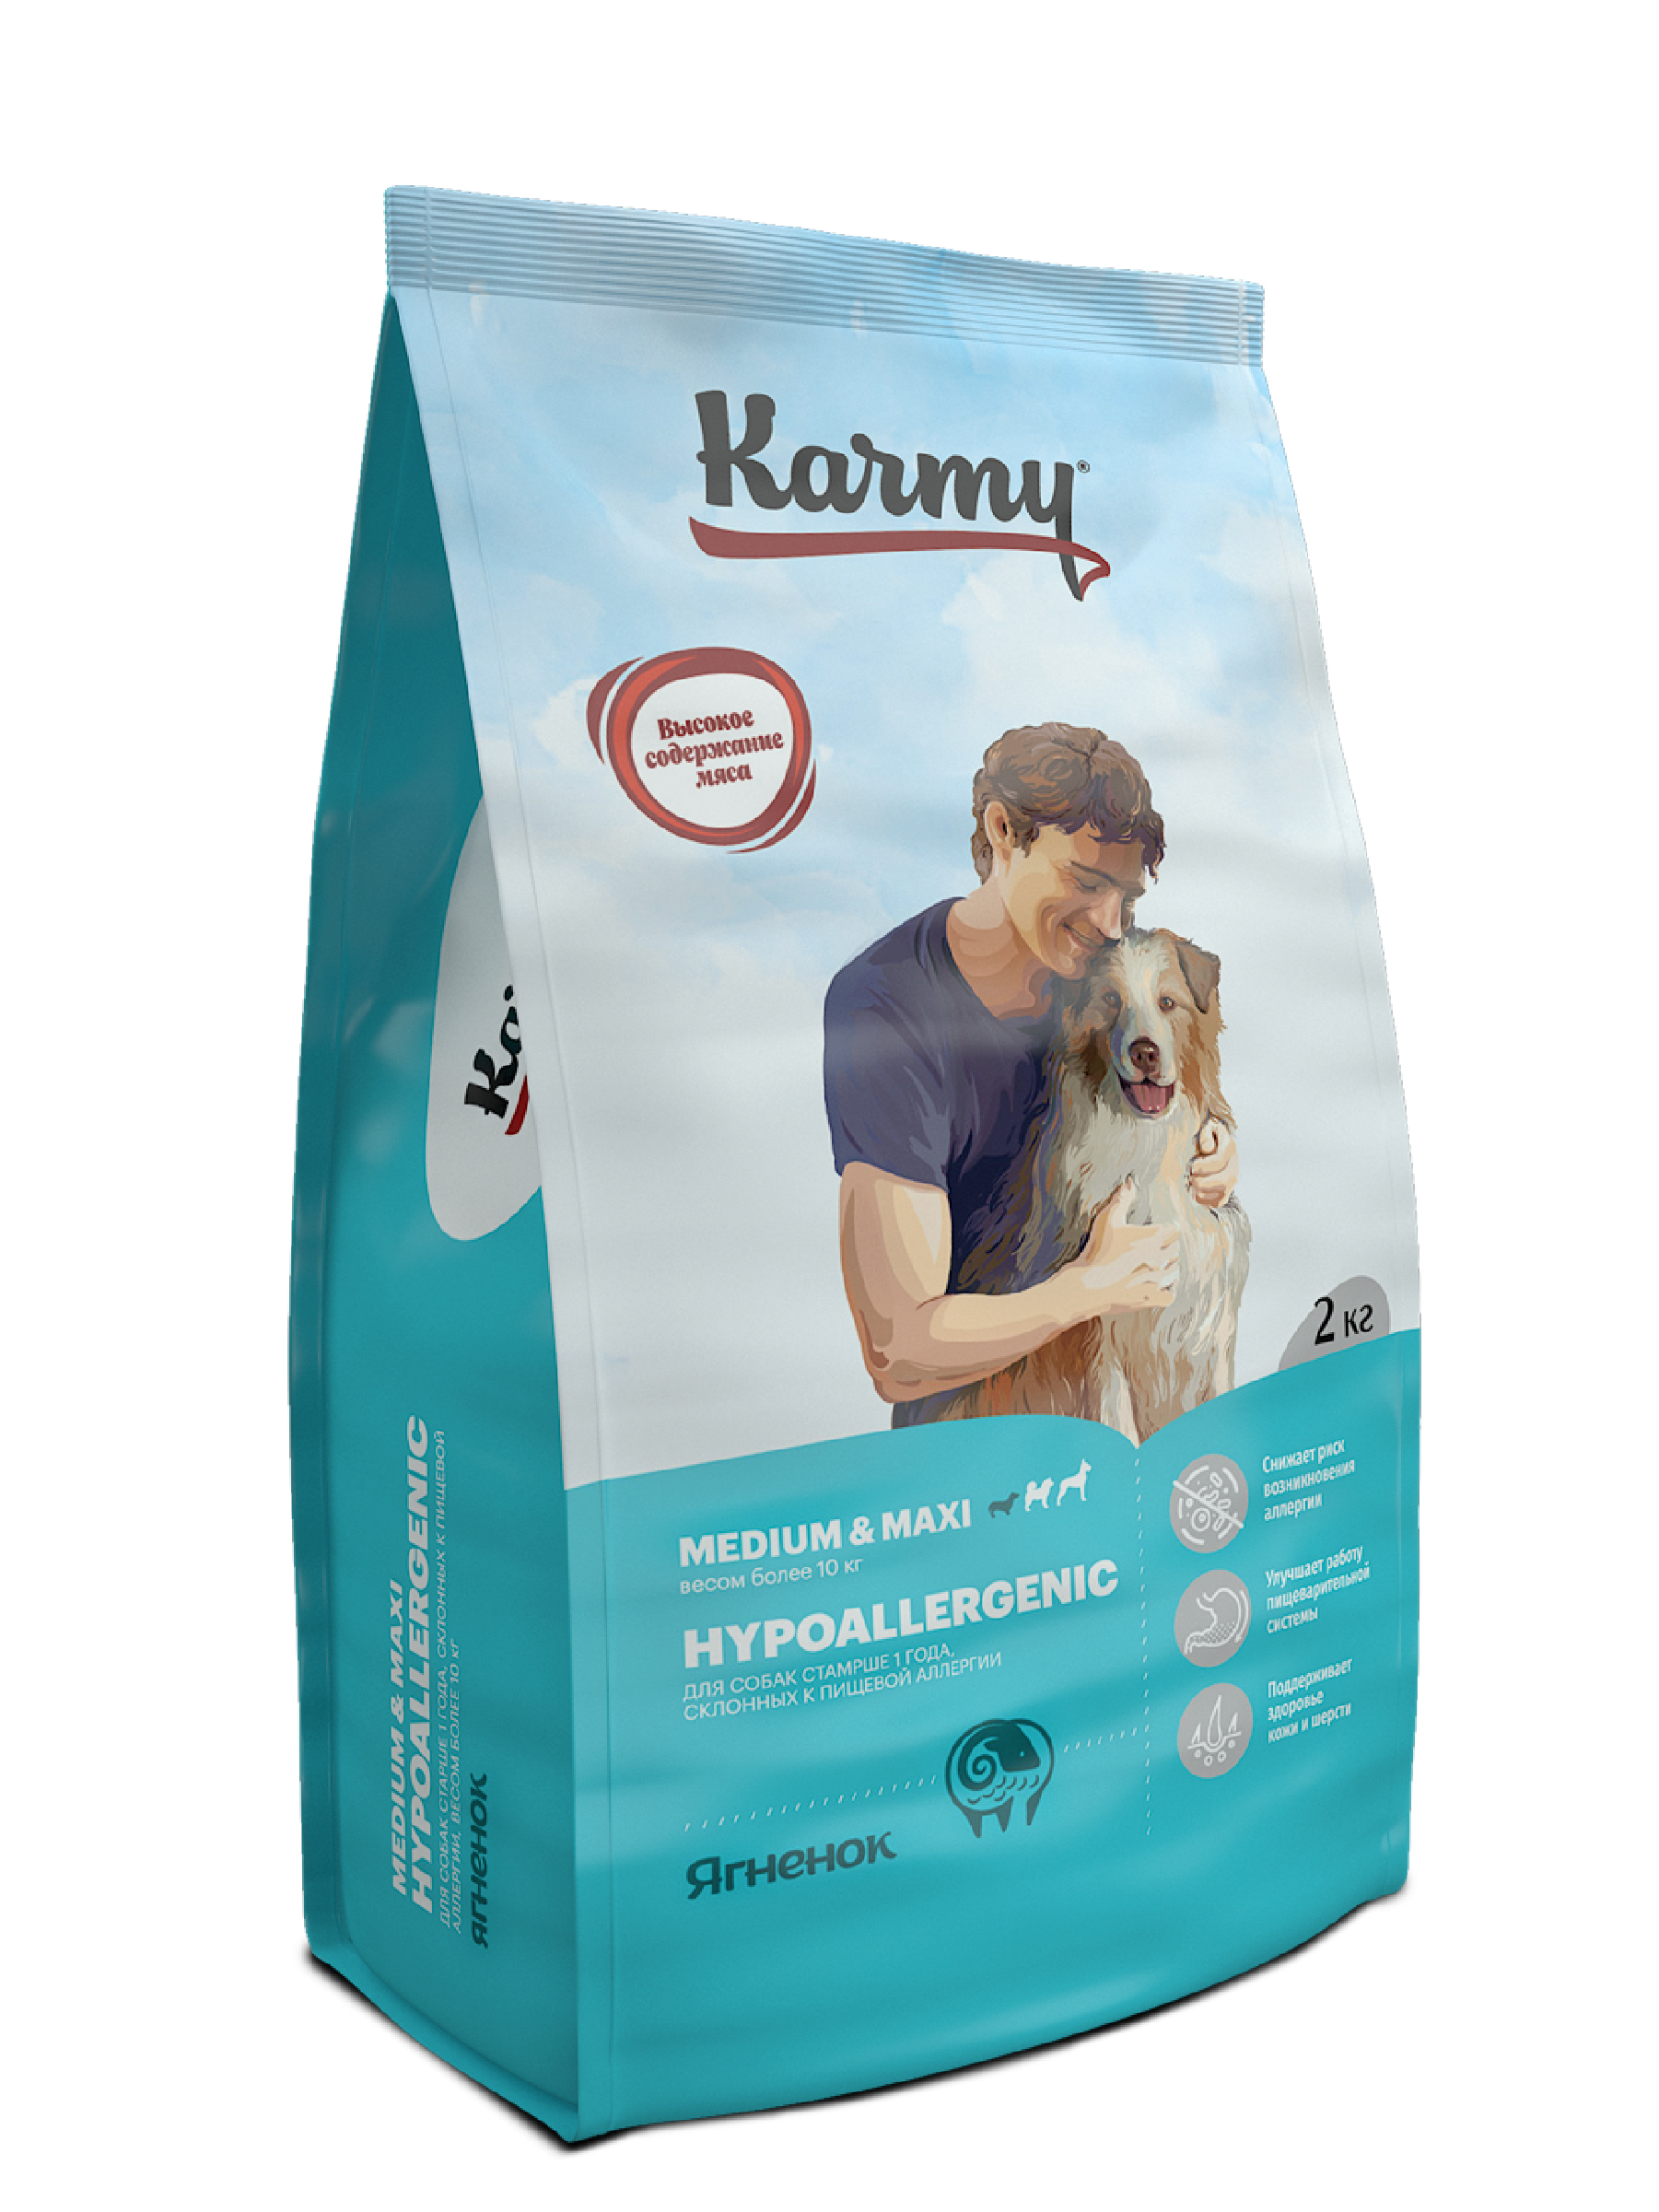 Сухой корм для собак Karmy Hypoallergenic Medium & Maxi, гипоаллергенный, ягненок, 2кг